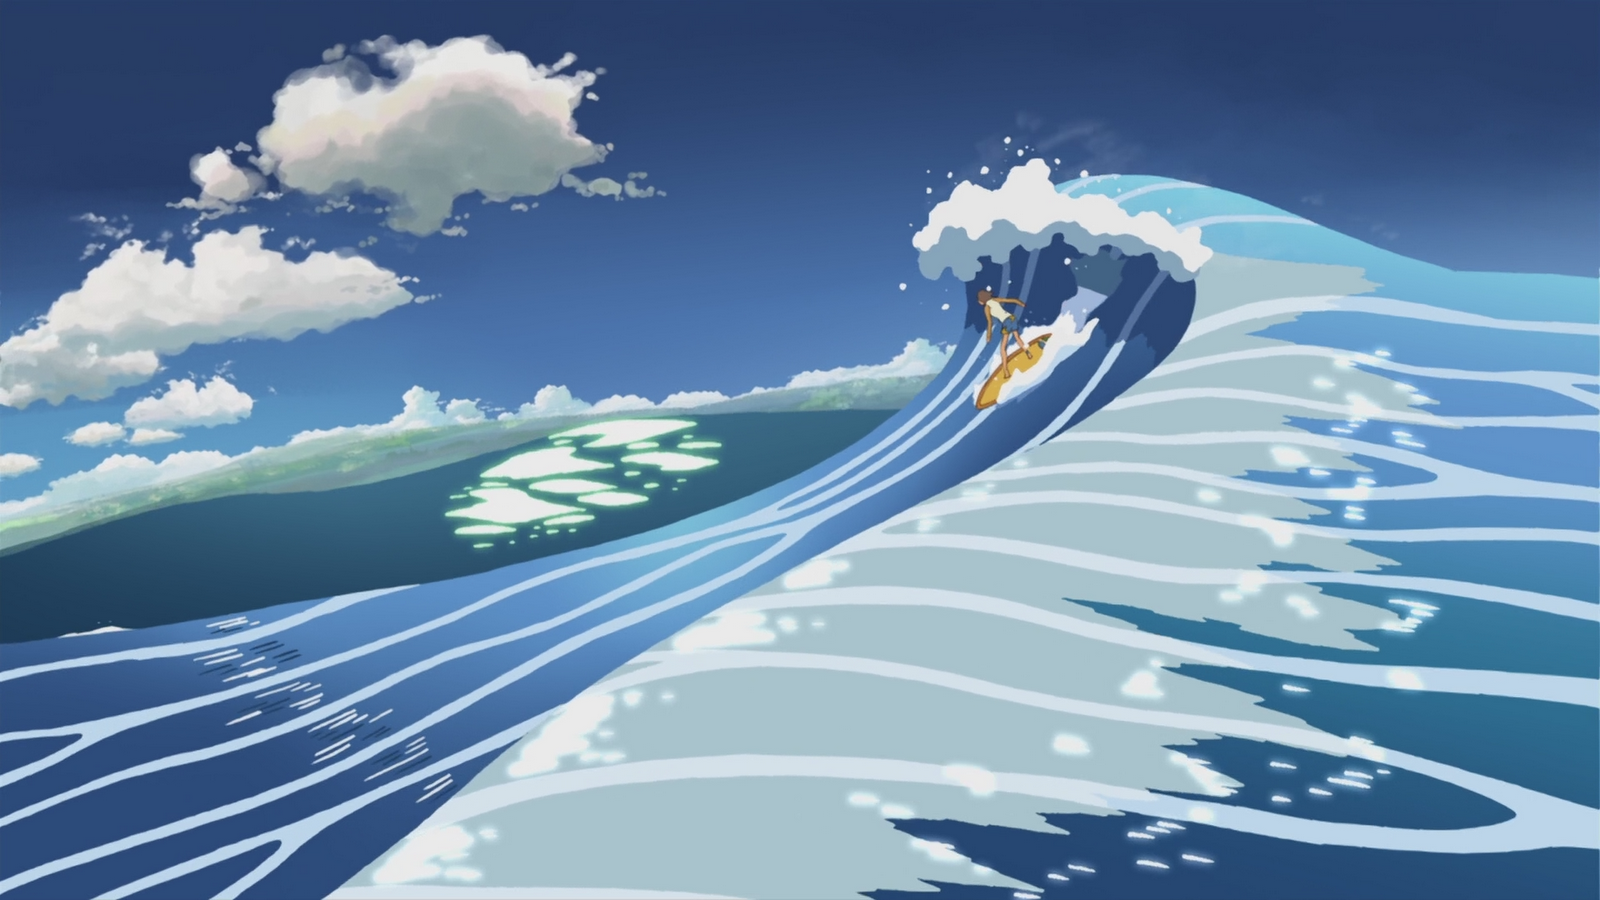 Labels Big Waves Surf Wallpaper Surfing Pictures